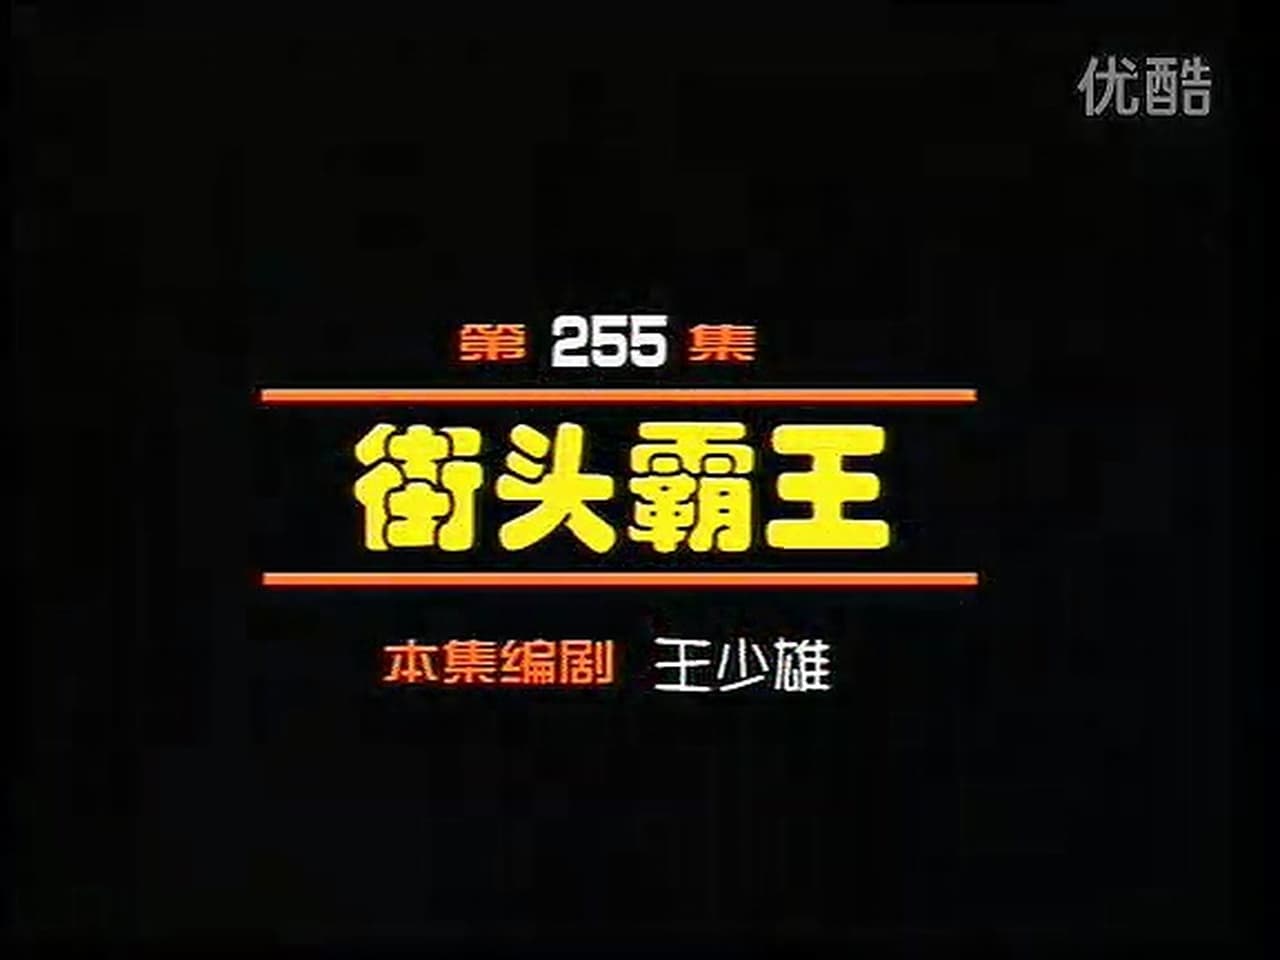 Episode 255